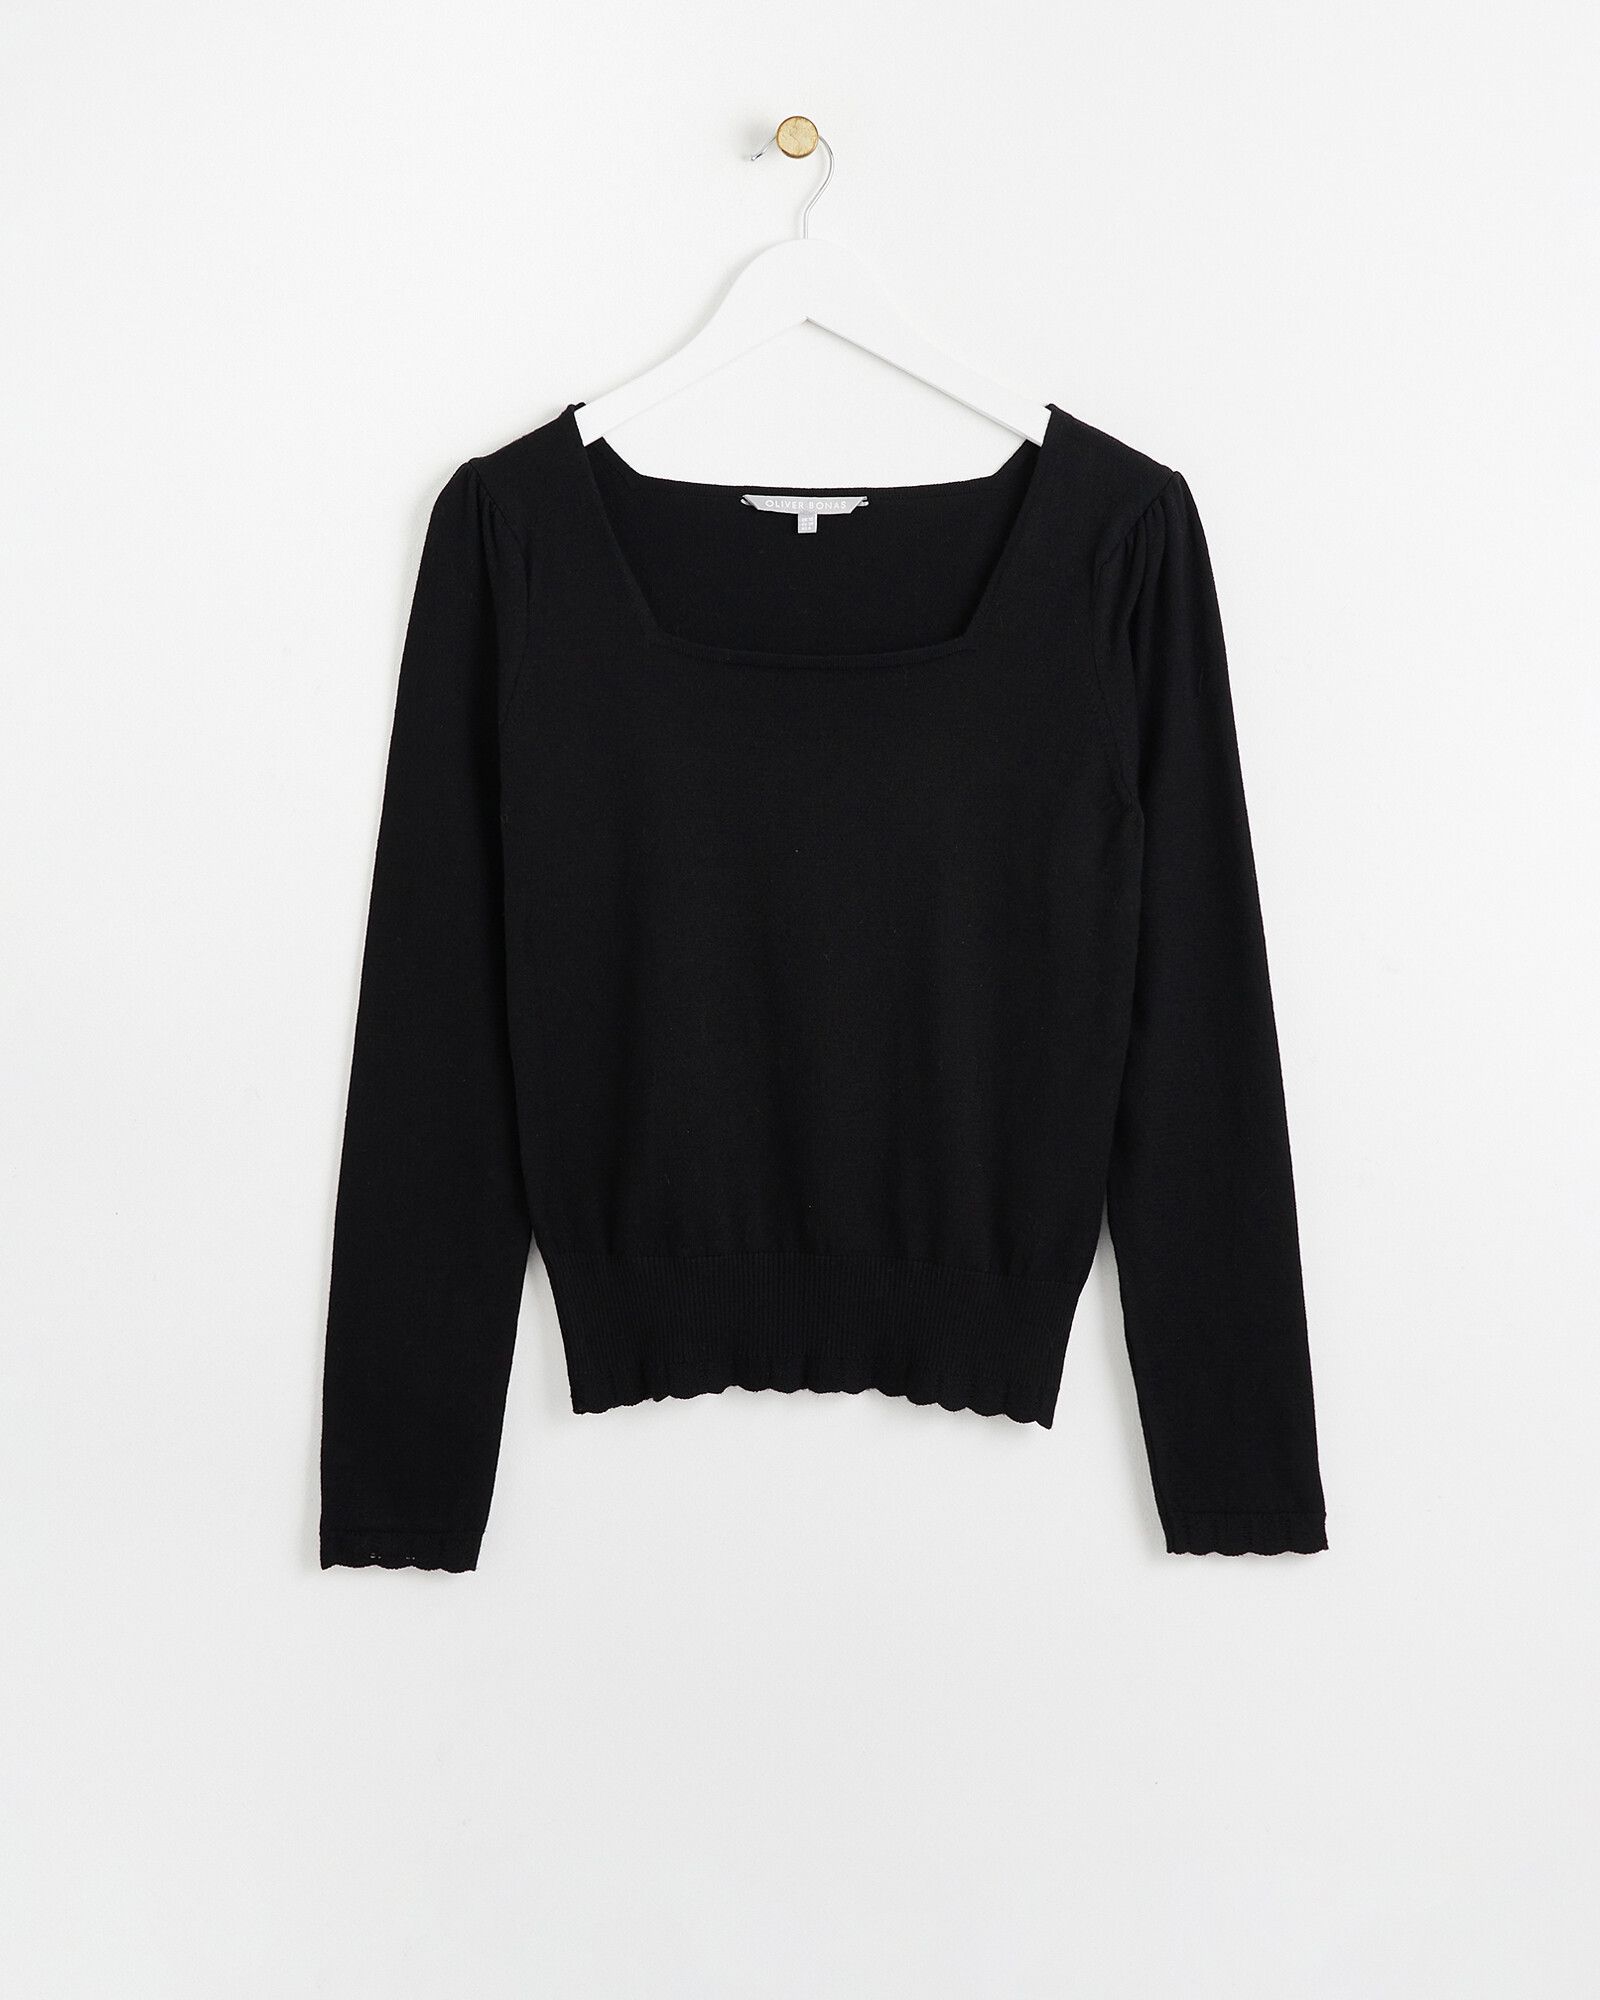 Square Neck Black Knitted Top | Oliver Bonas